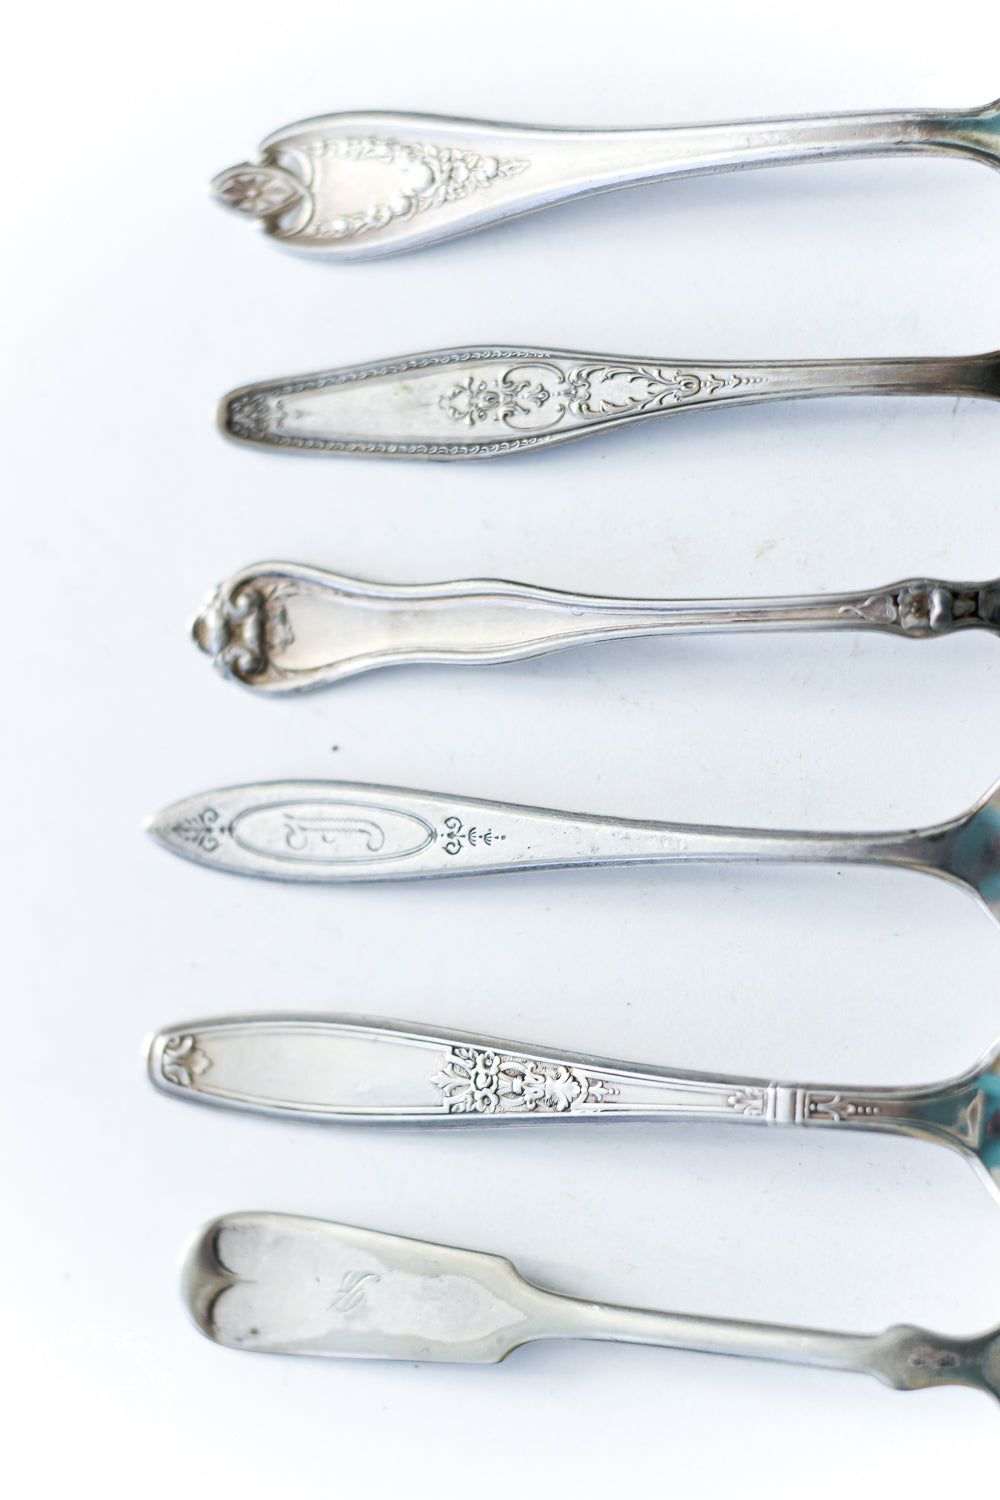 Vintage Silverplate Spoon Set